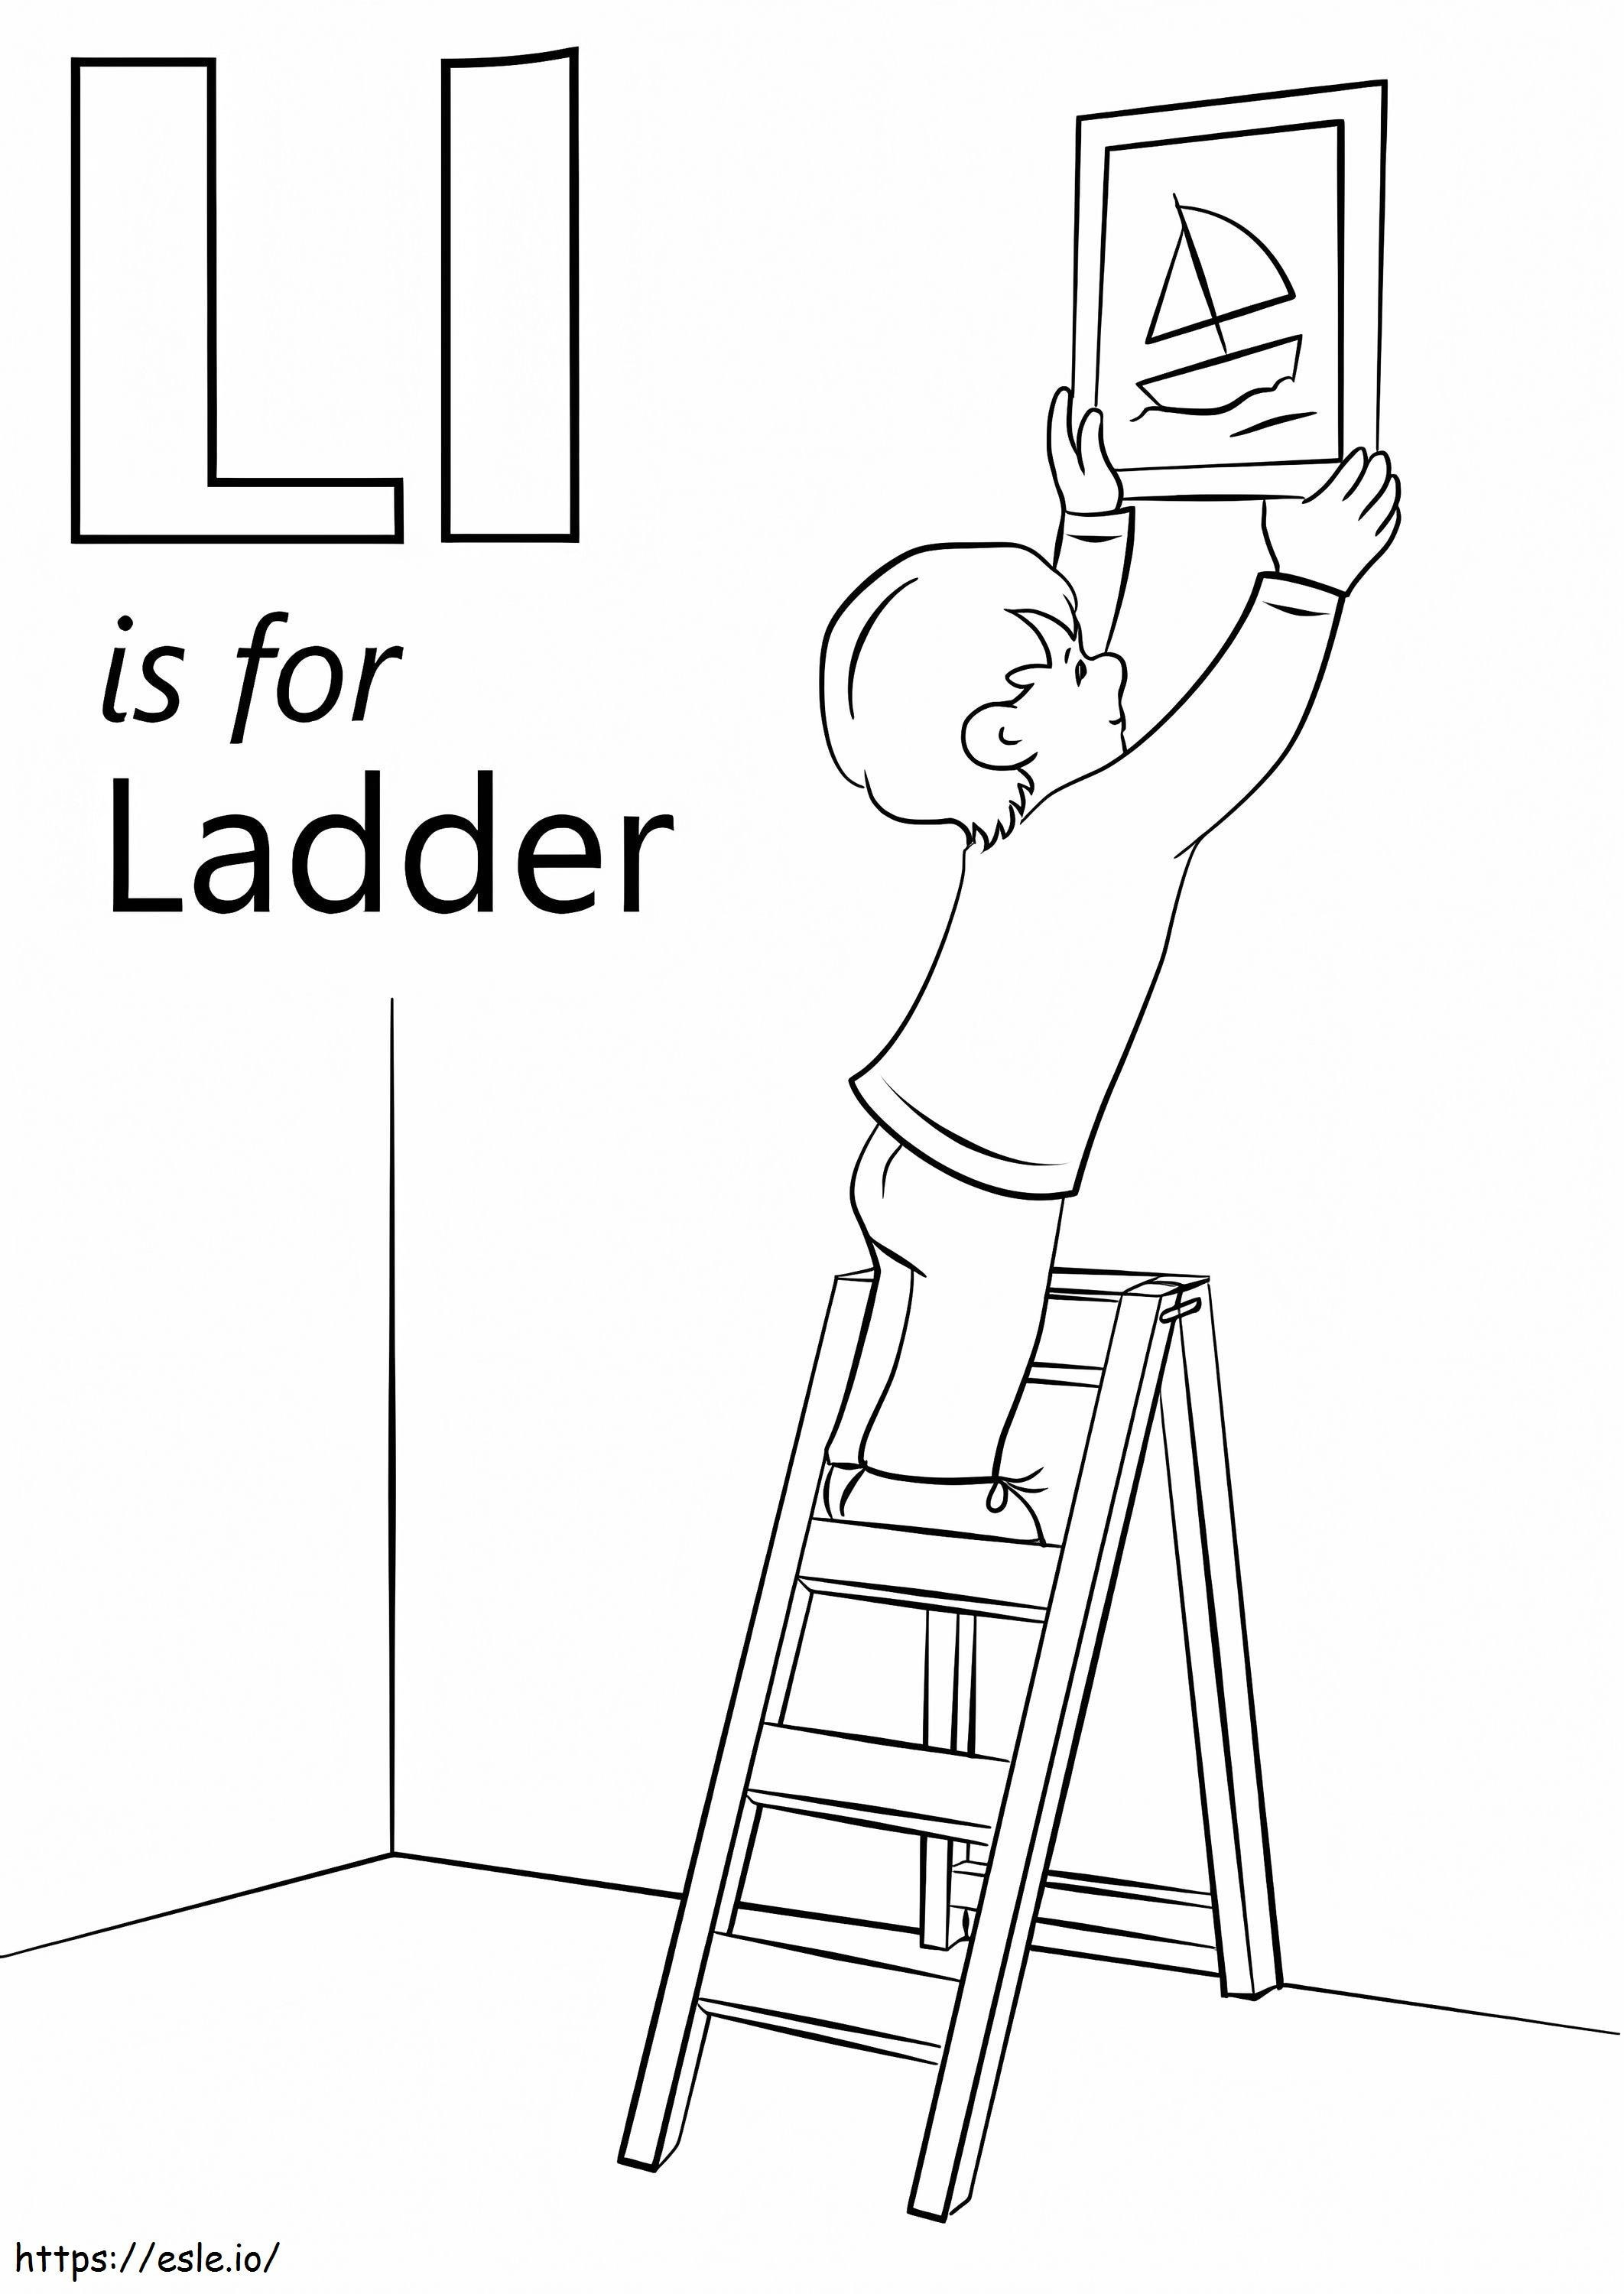 Ladderletter L kleurplaat kleurplaat